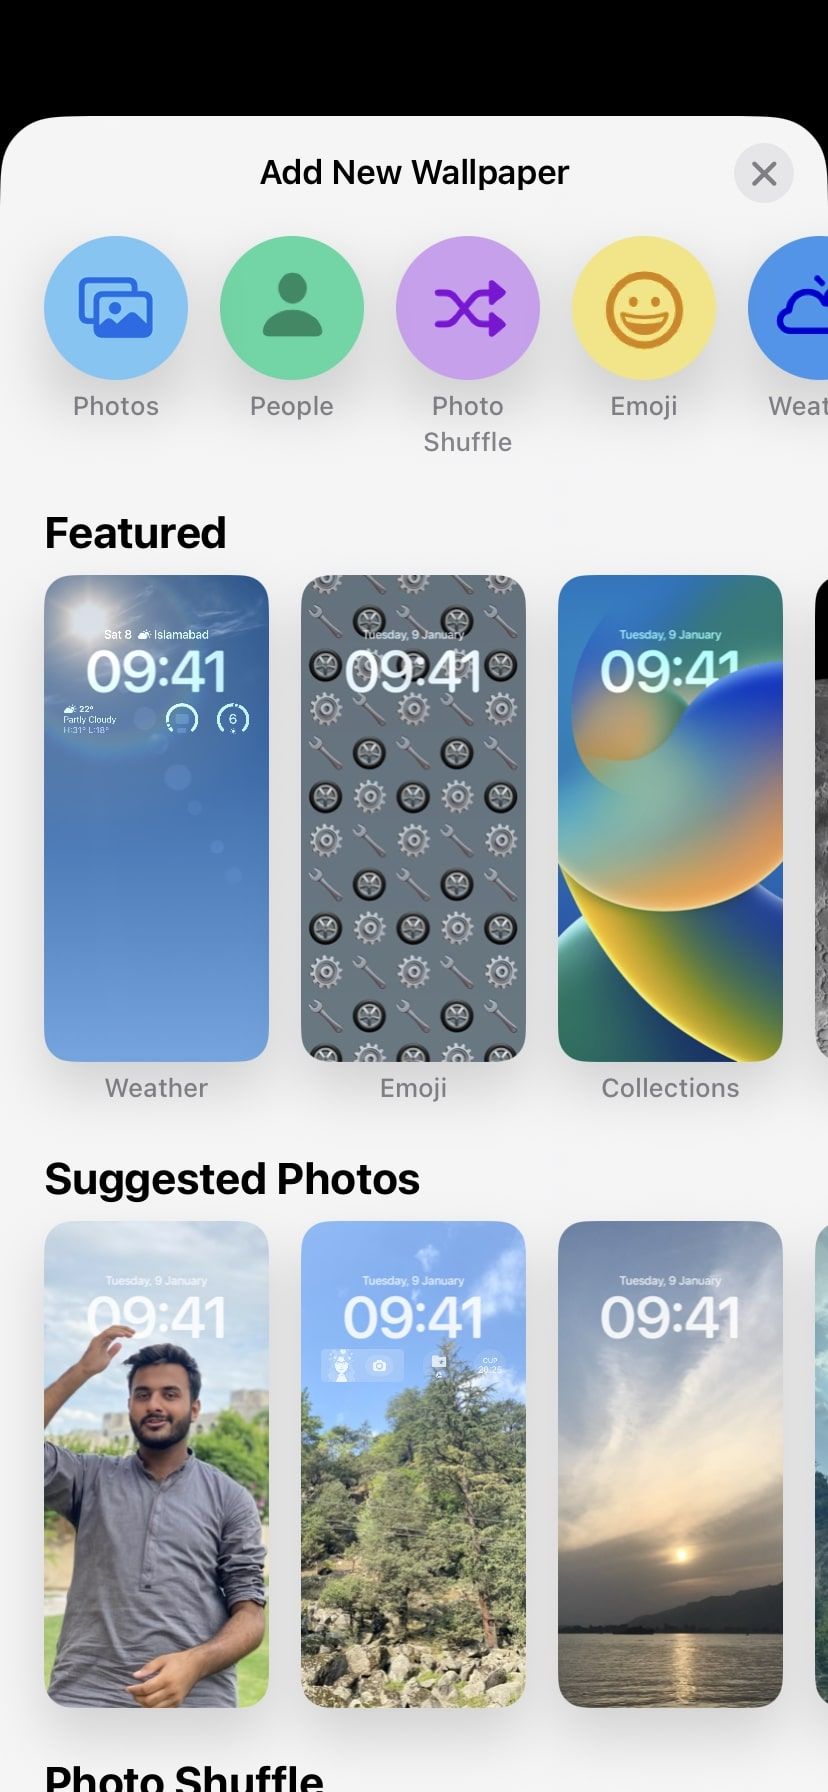 photo shuffle in iOS